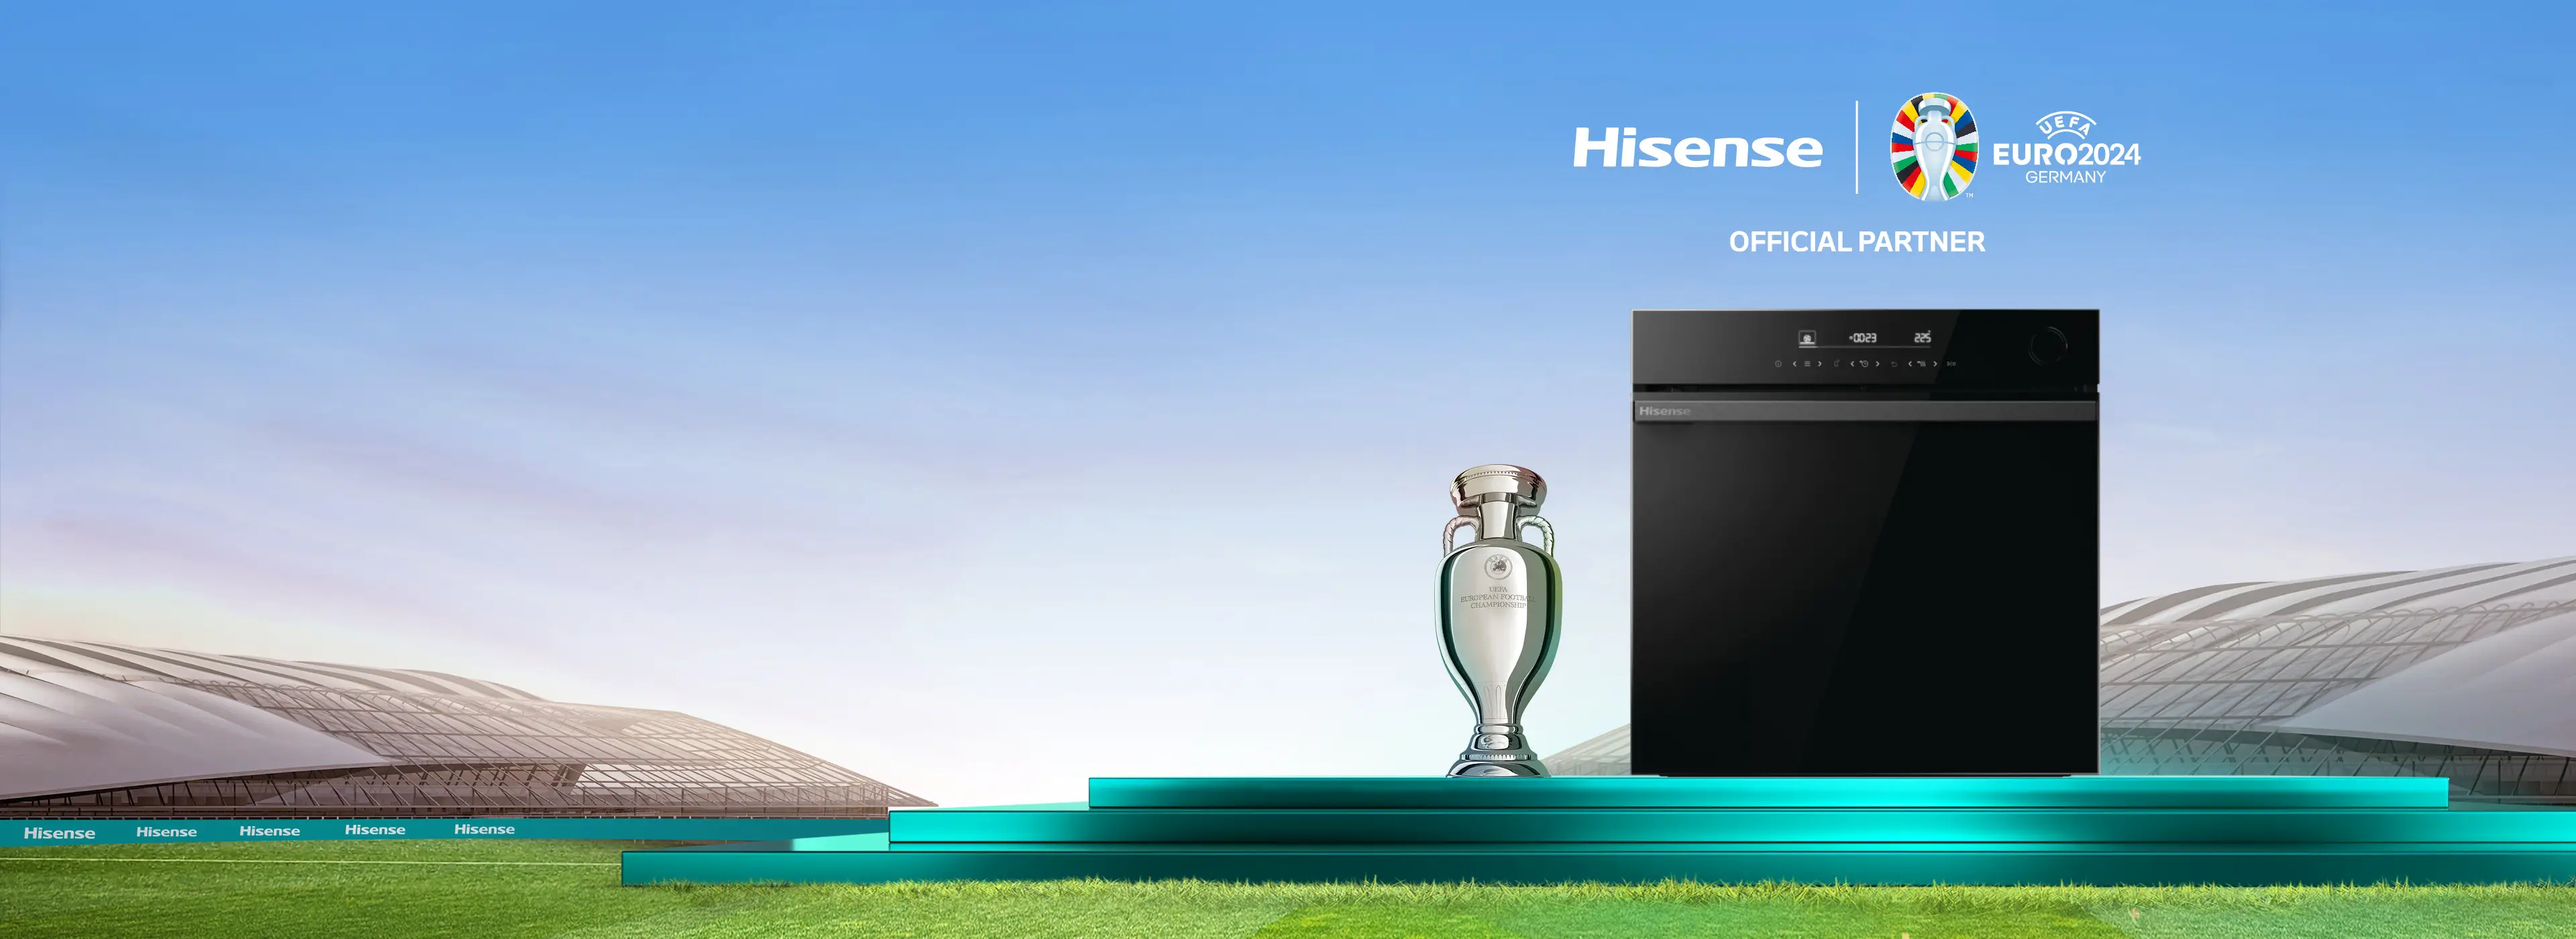 Hisense EURO2024 kategorie 3840x1400 Oven.webp